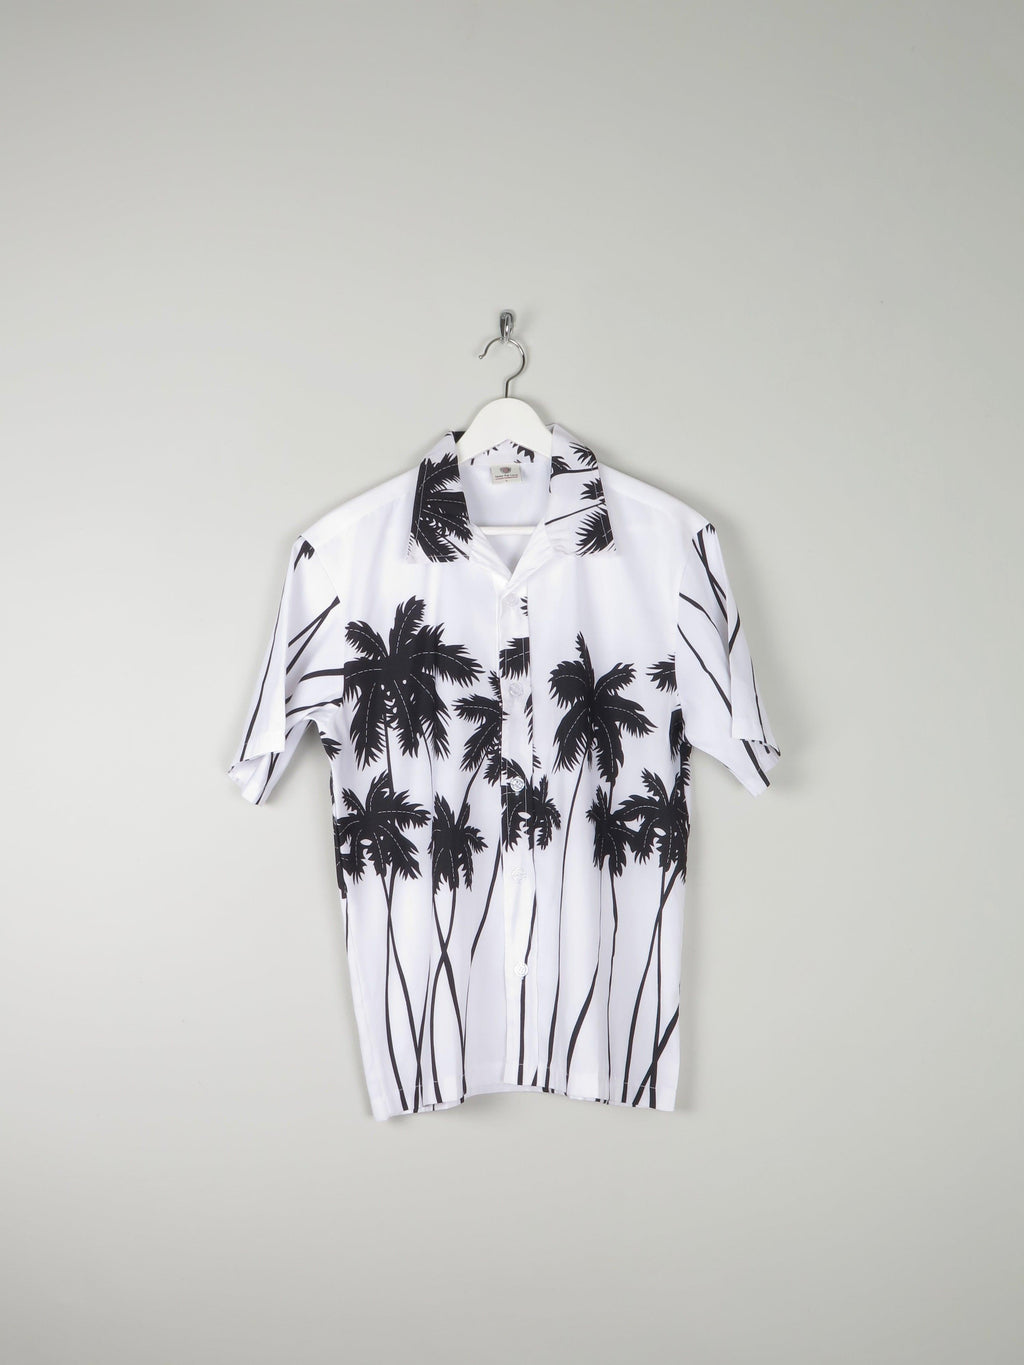 Men's Black & White Vintage Hawaiian Shirt S/M - The Harlequin